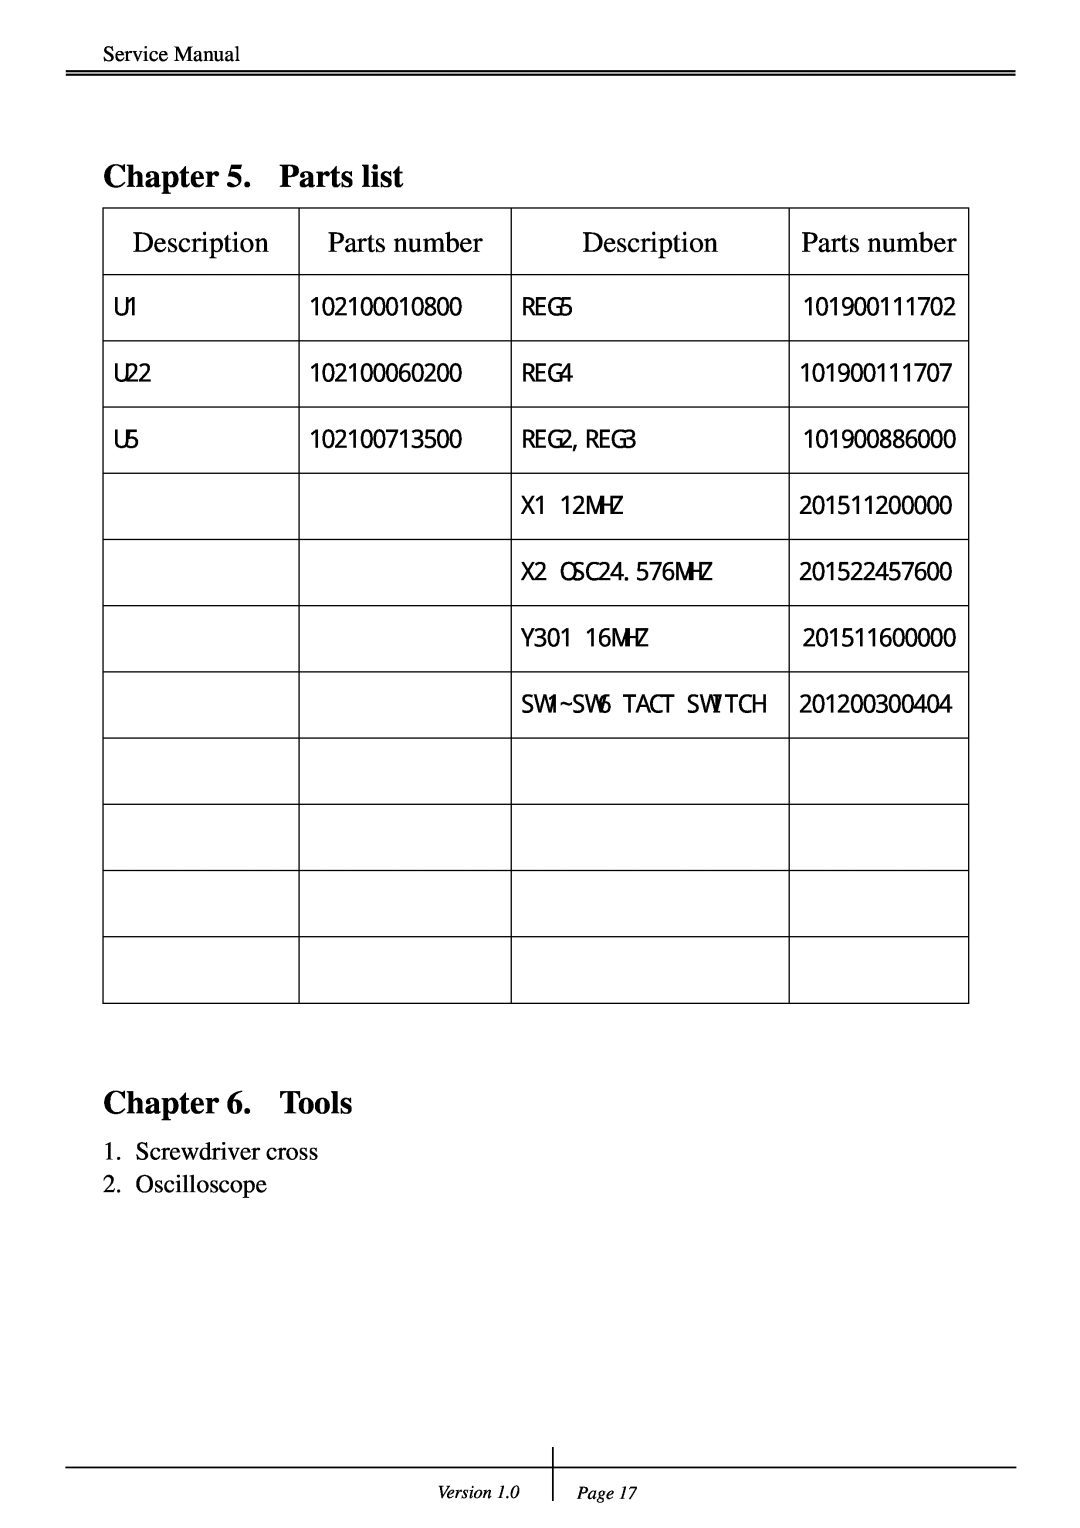 Genius TVB-S201 PRO service manual Tools, Chapter, Parts list, Description, Parts number 